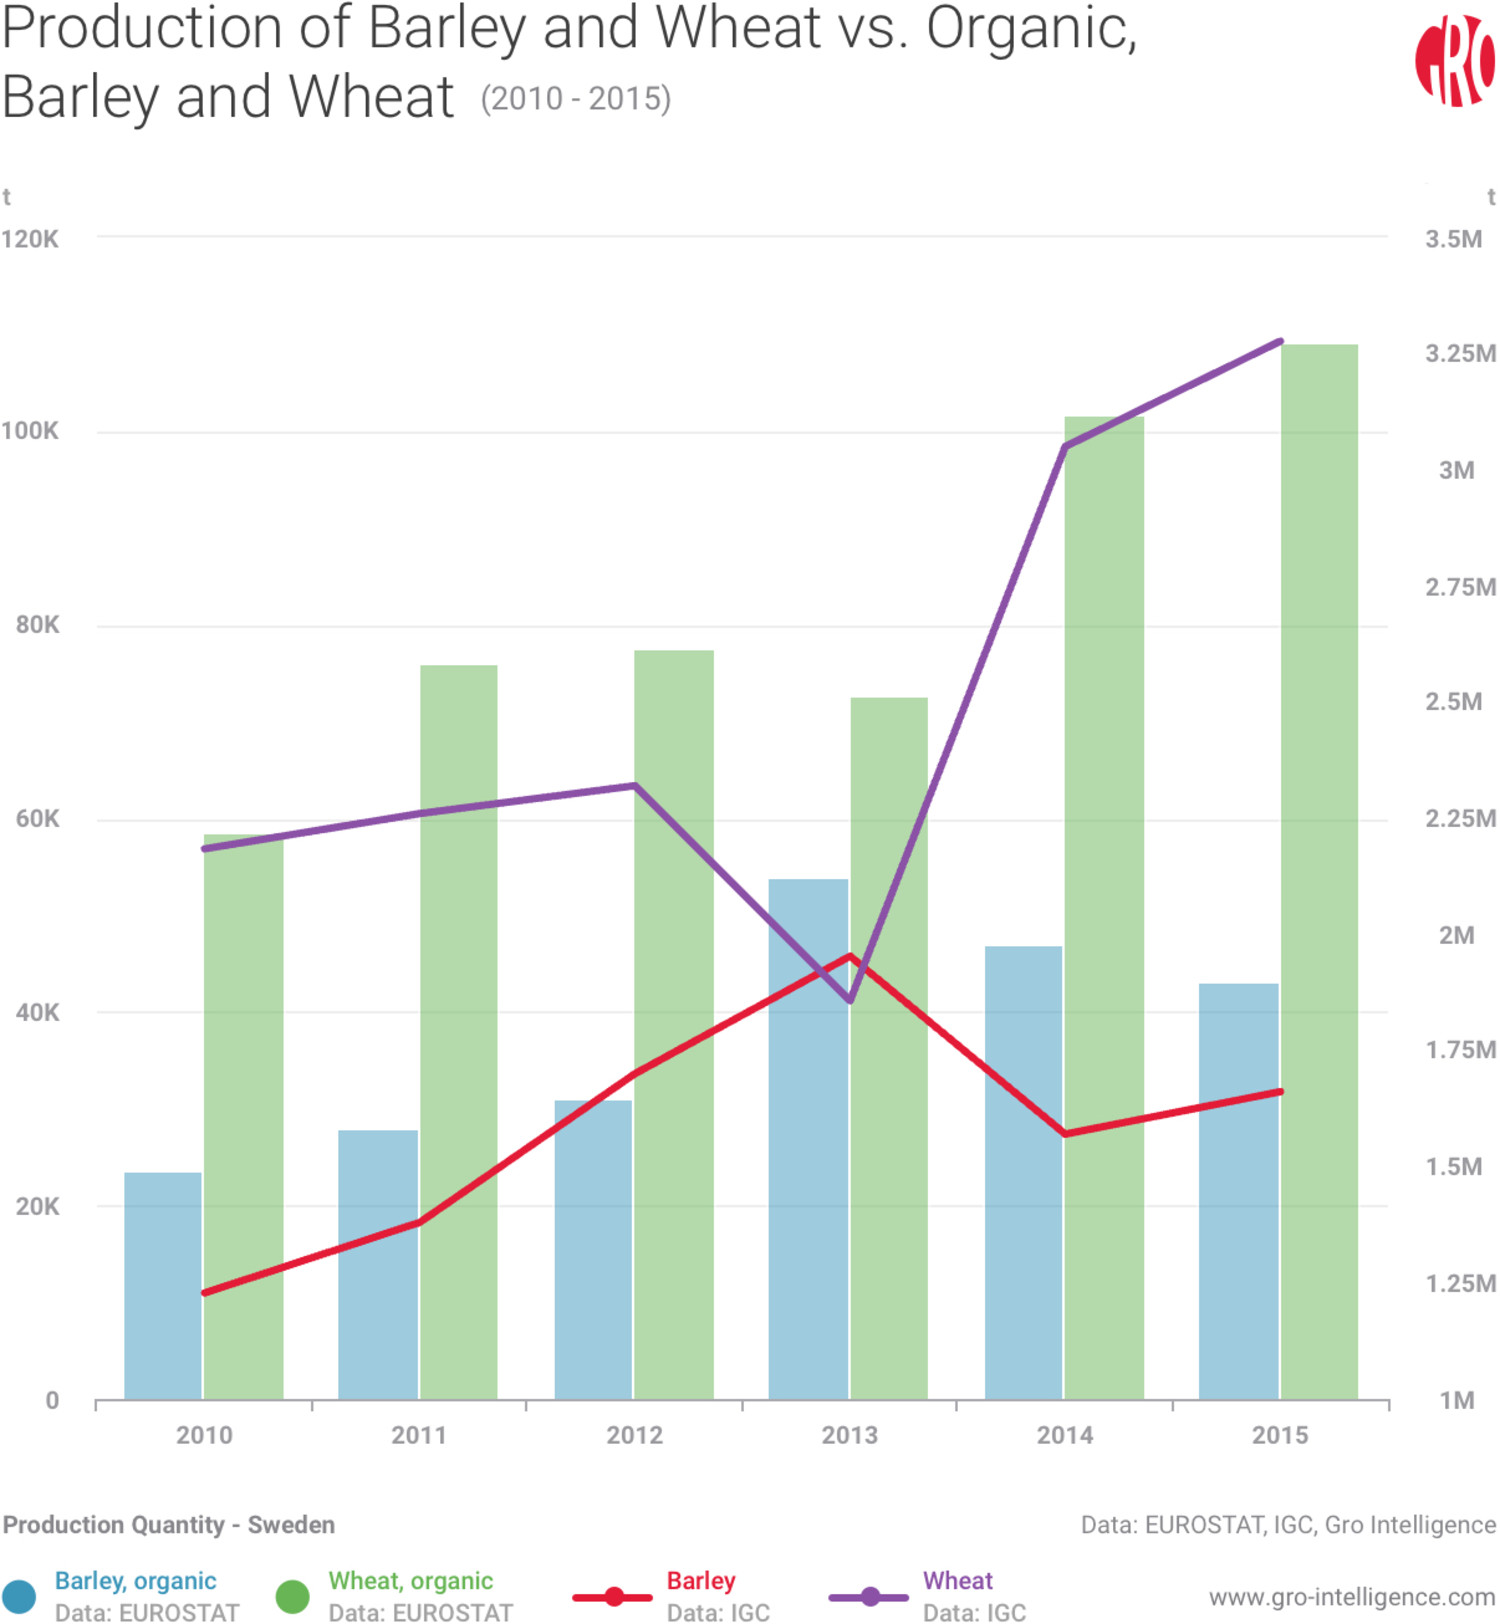 Production of Barley and Wheat vs. Organic Barley and Wheat